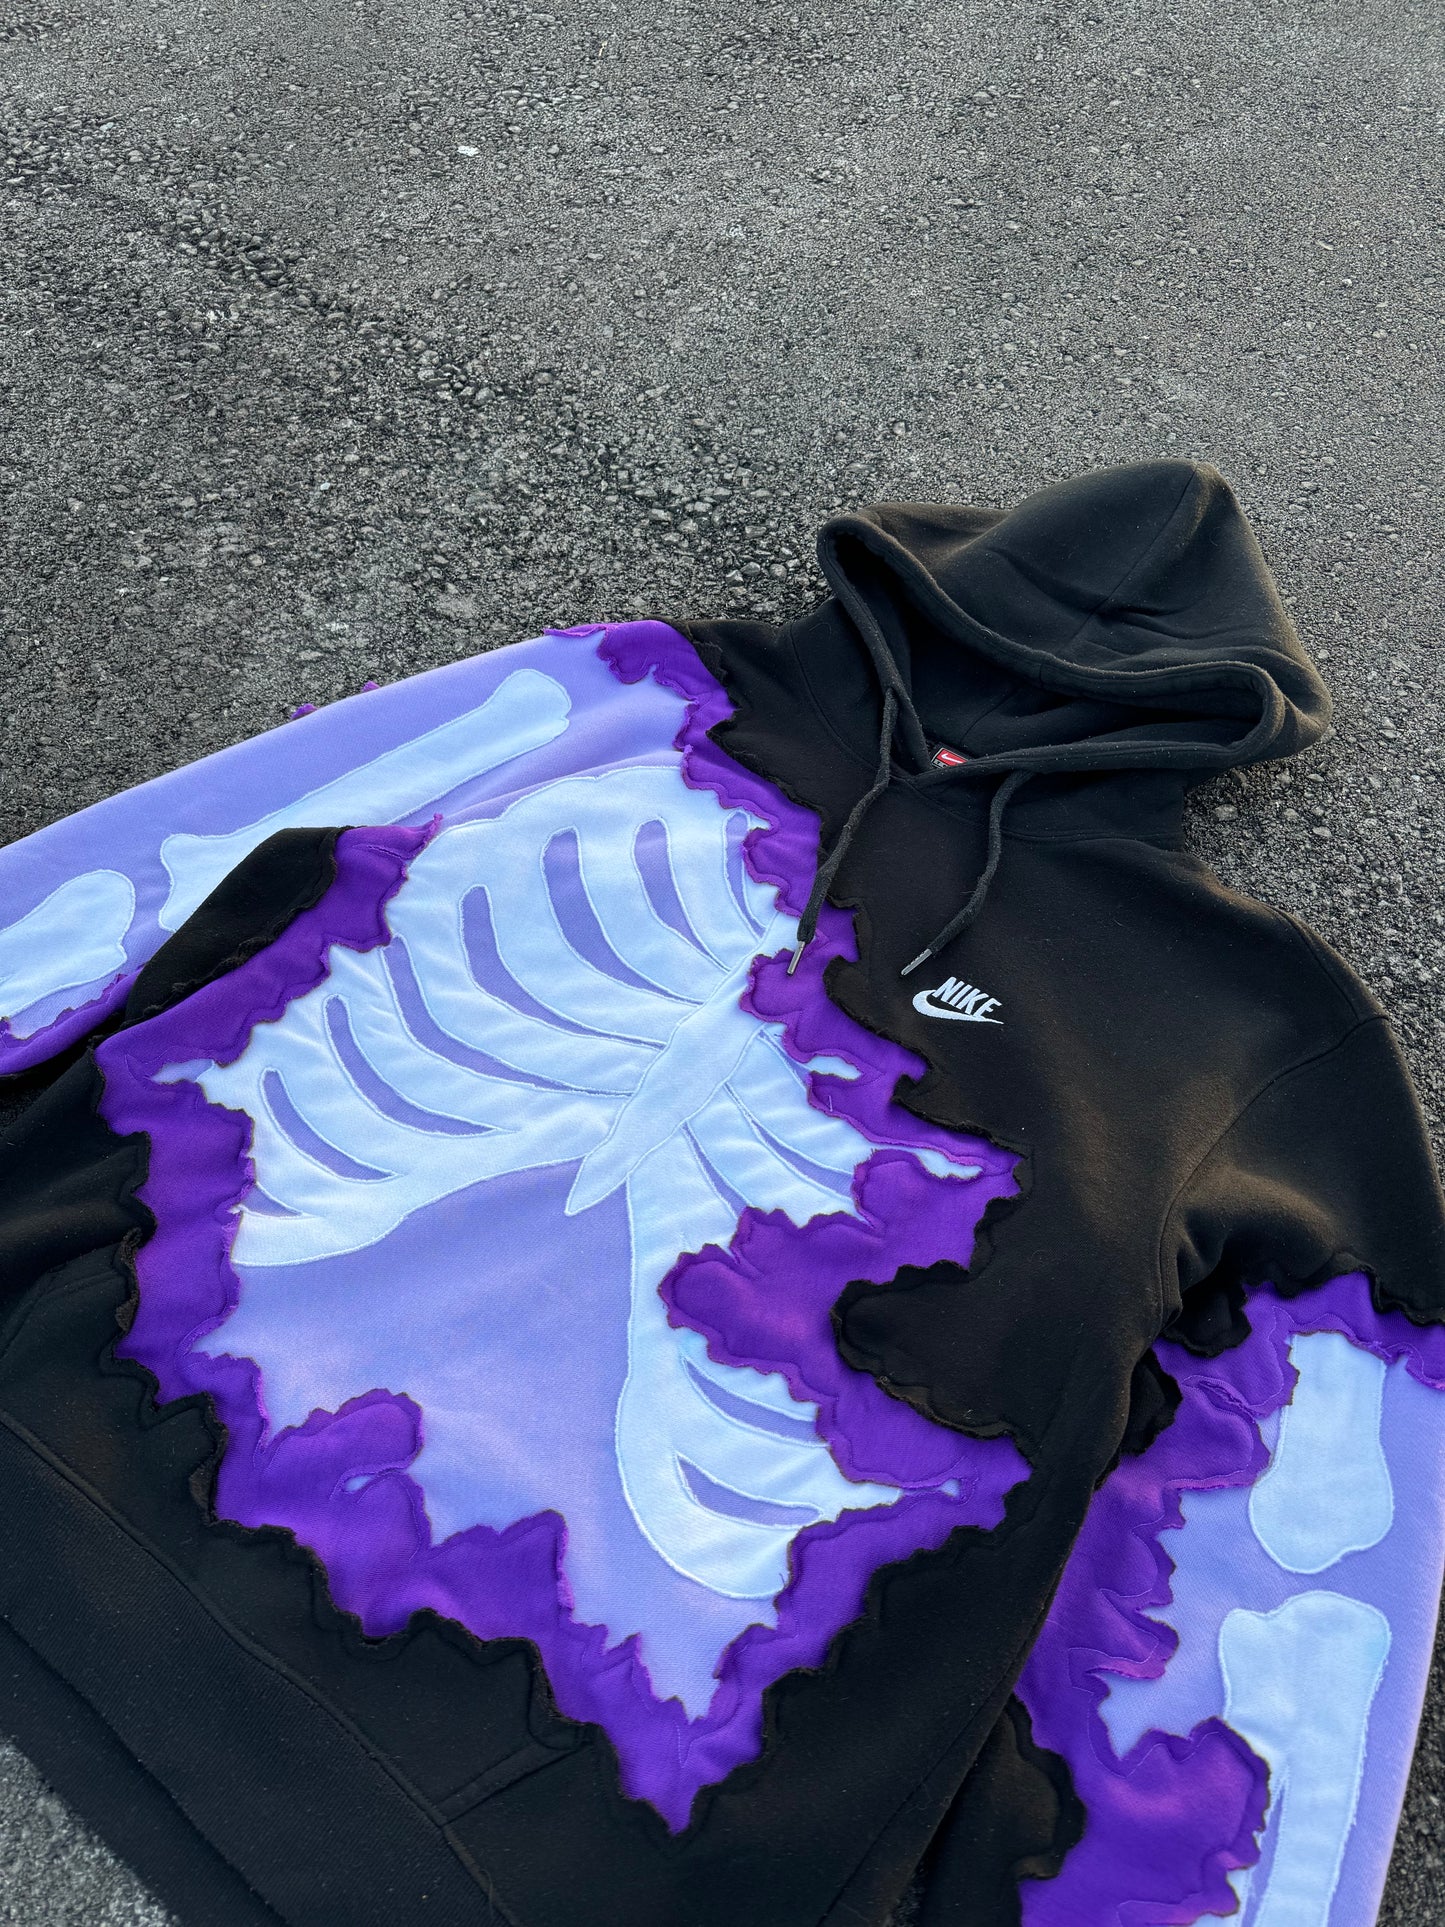 Black/Purple Bones Hoodie (XL/XXL)